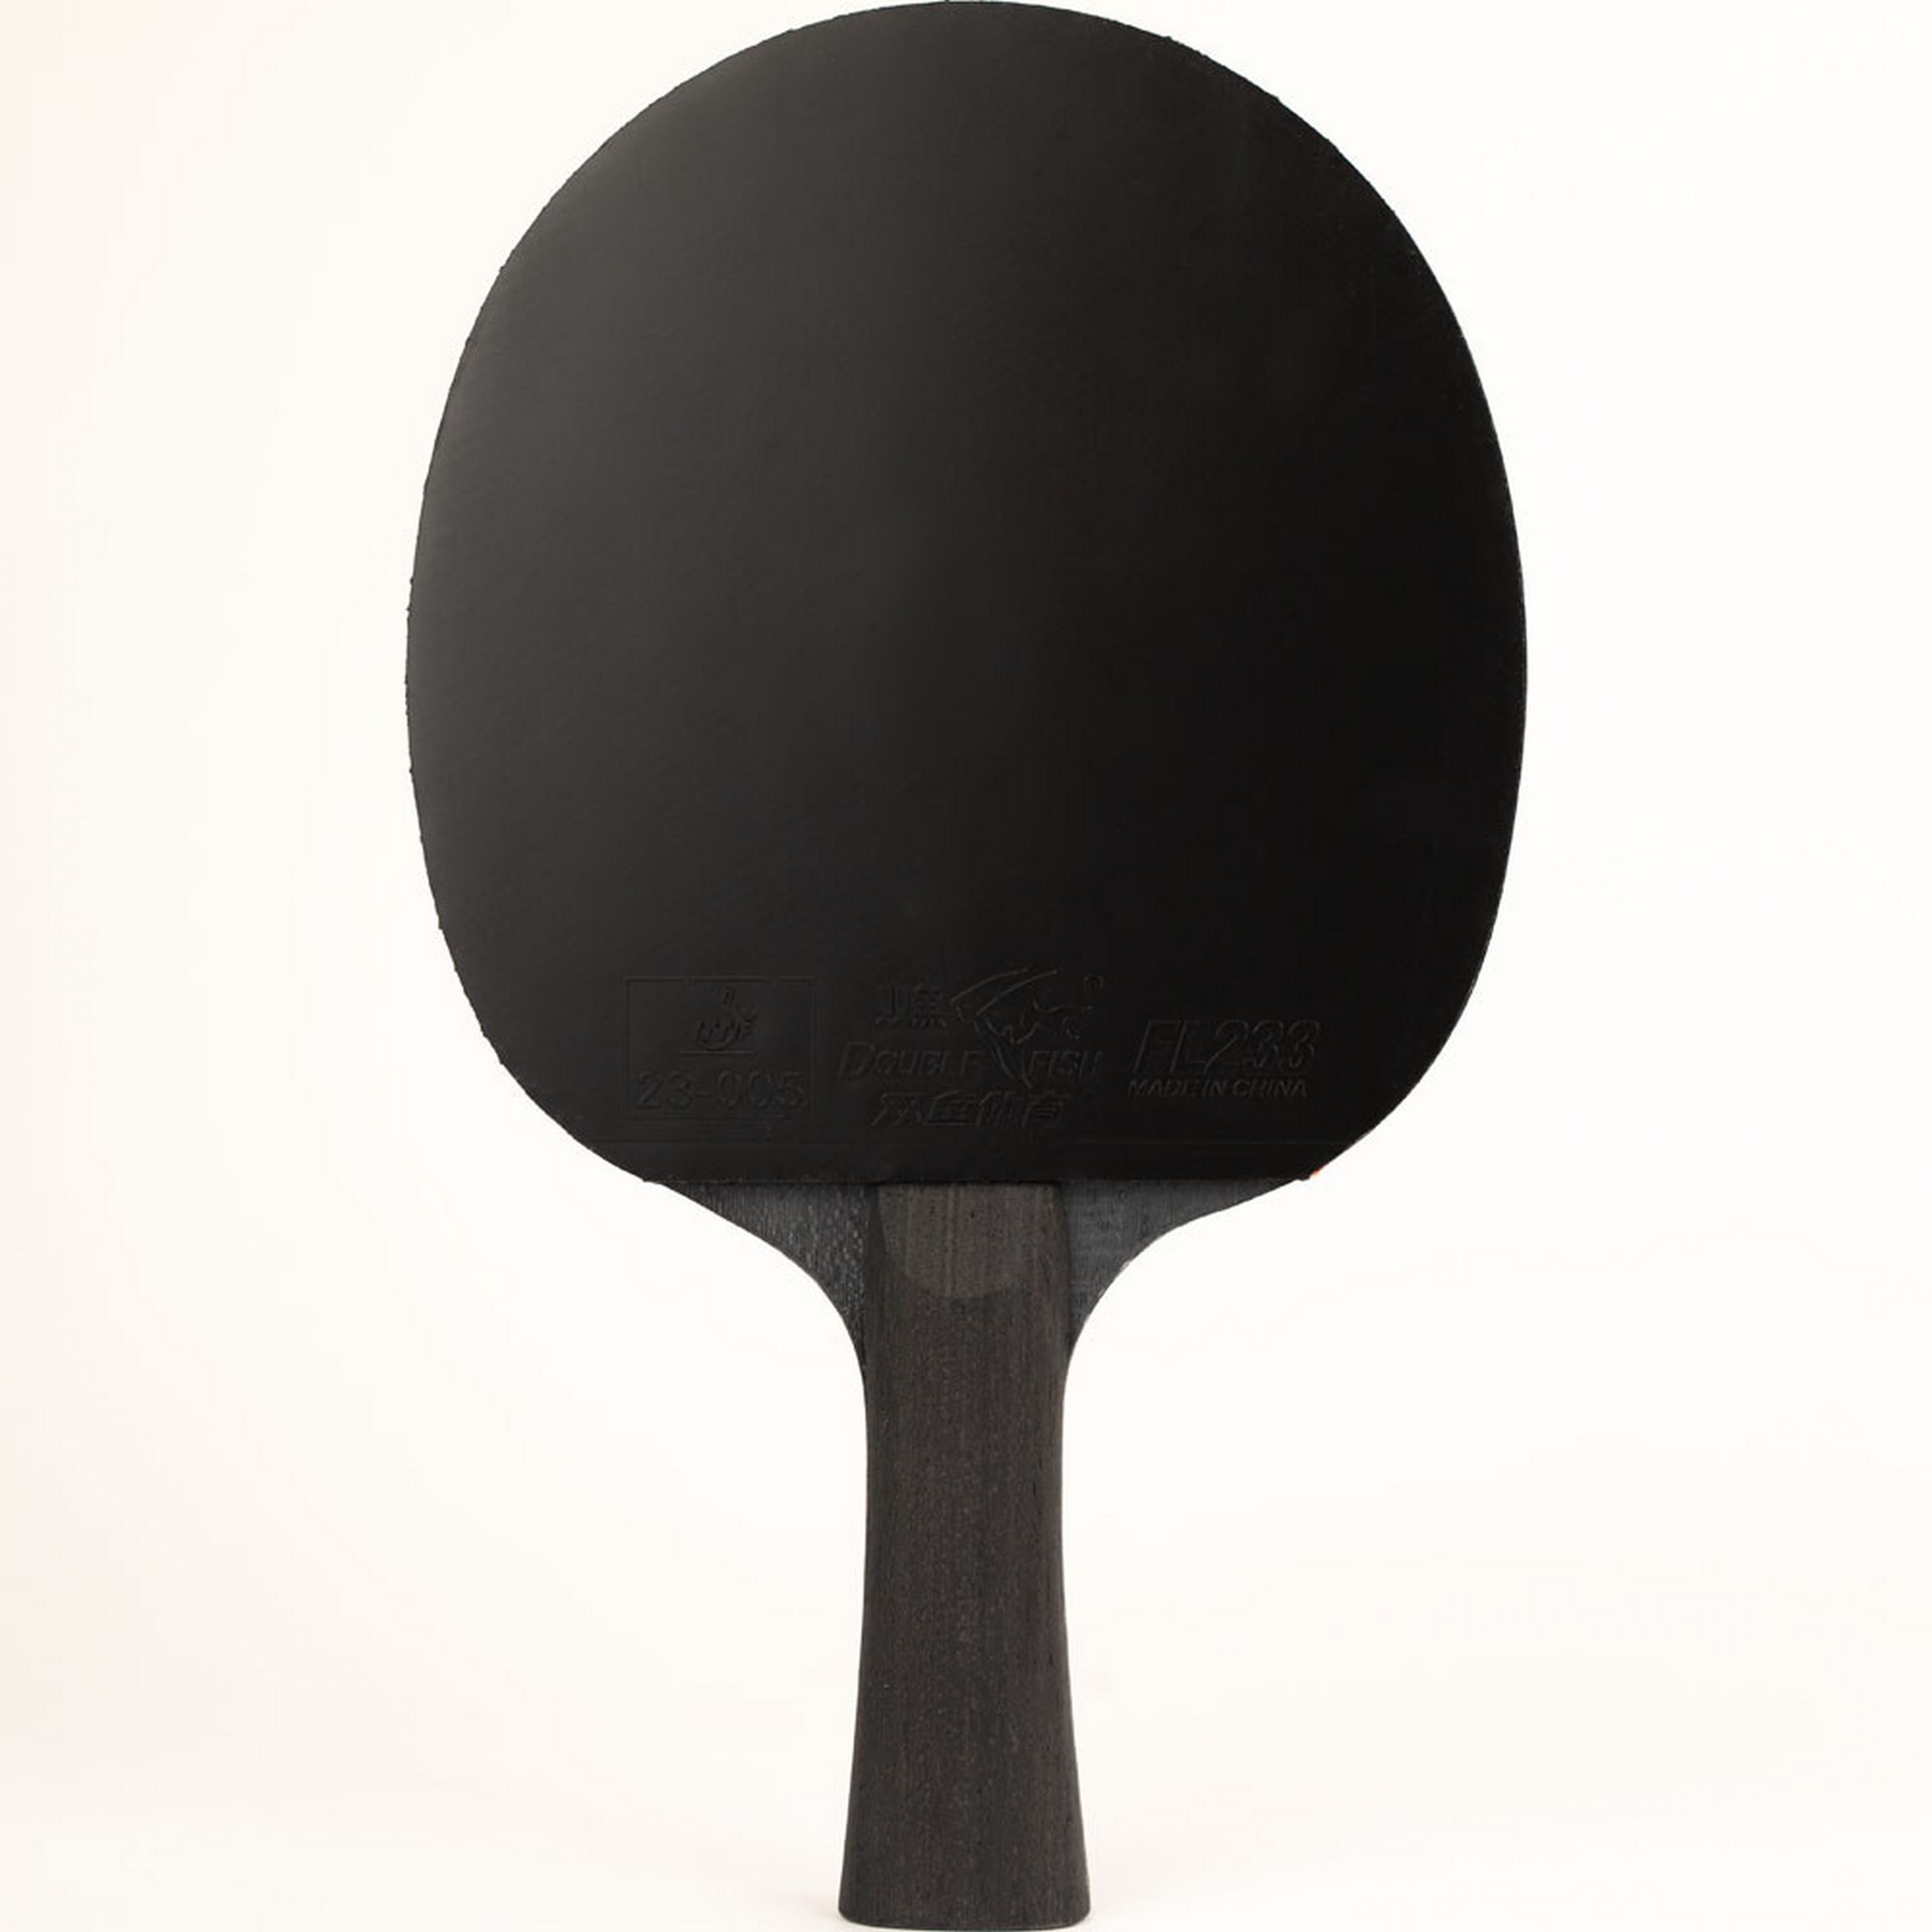 Ракетка для настольного тенниса Double Fish Black Carbon King Racket 3***,ITTF Appr 2000_2000